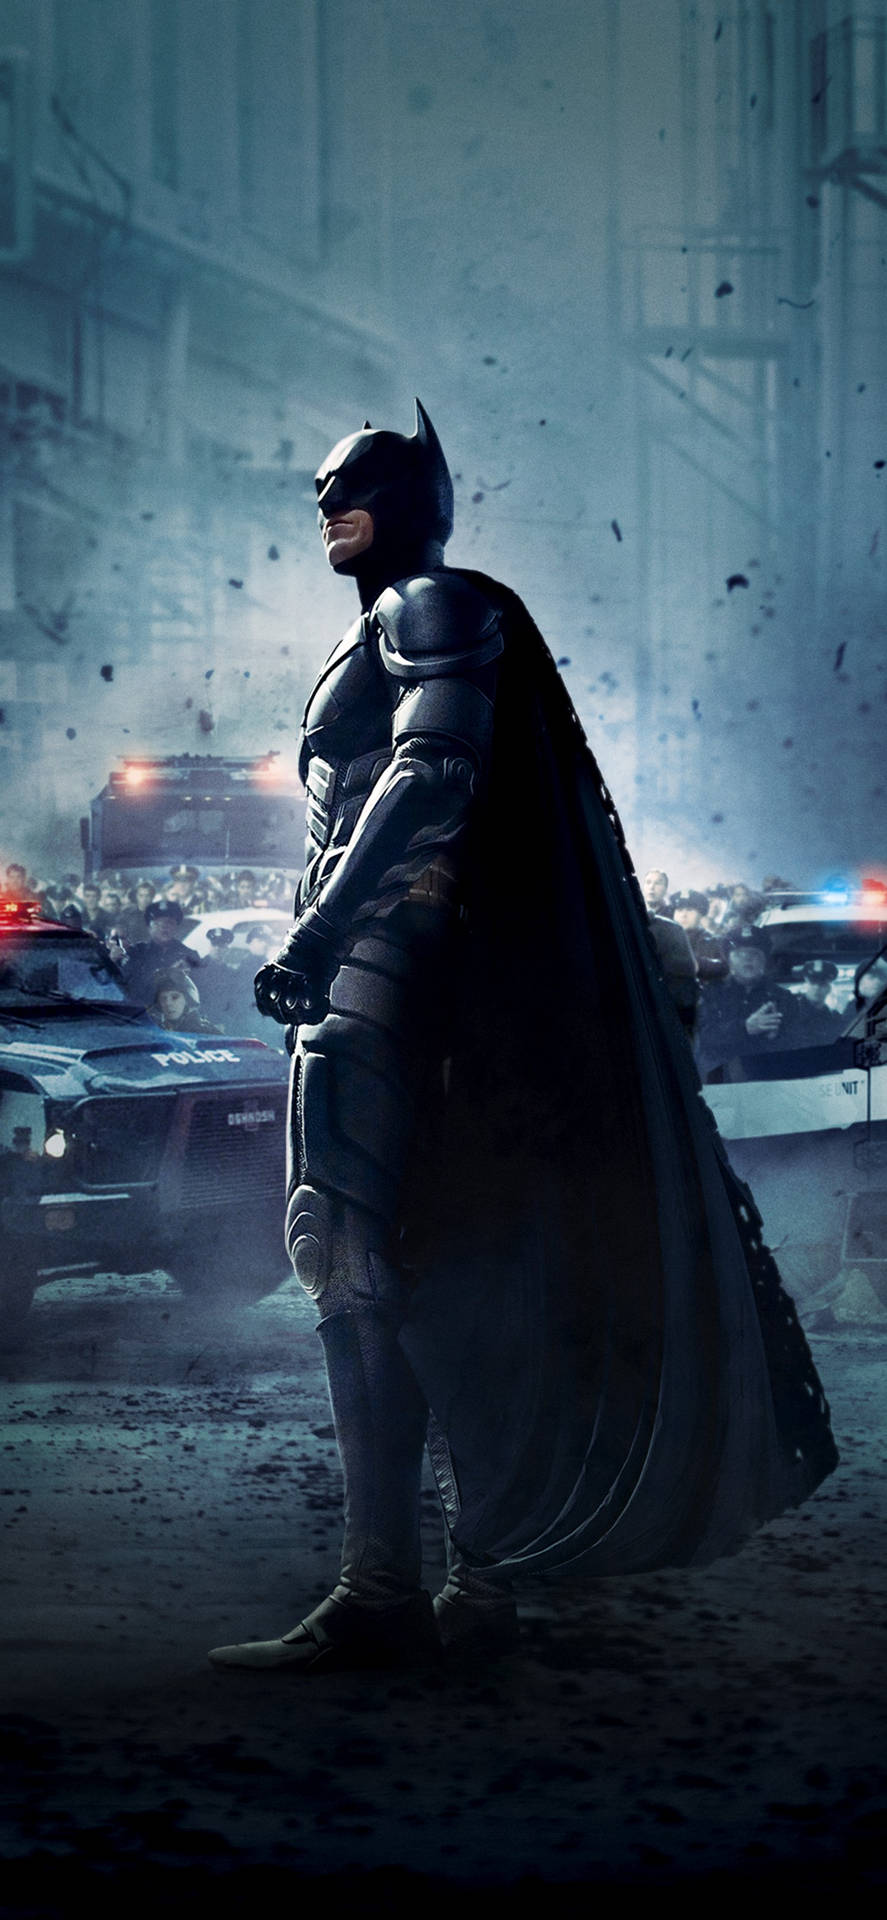 Download The Dark Knight Batman Portrait Wallpaper 